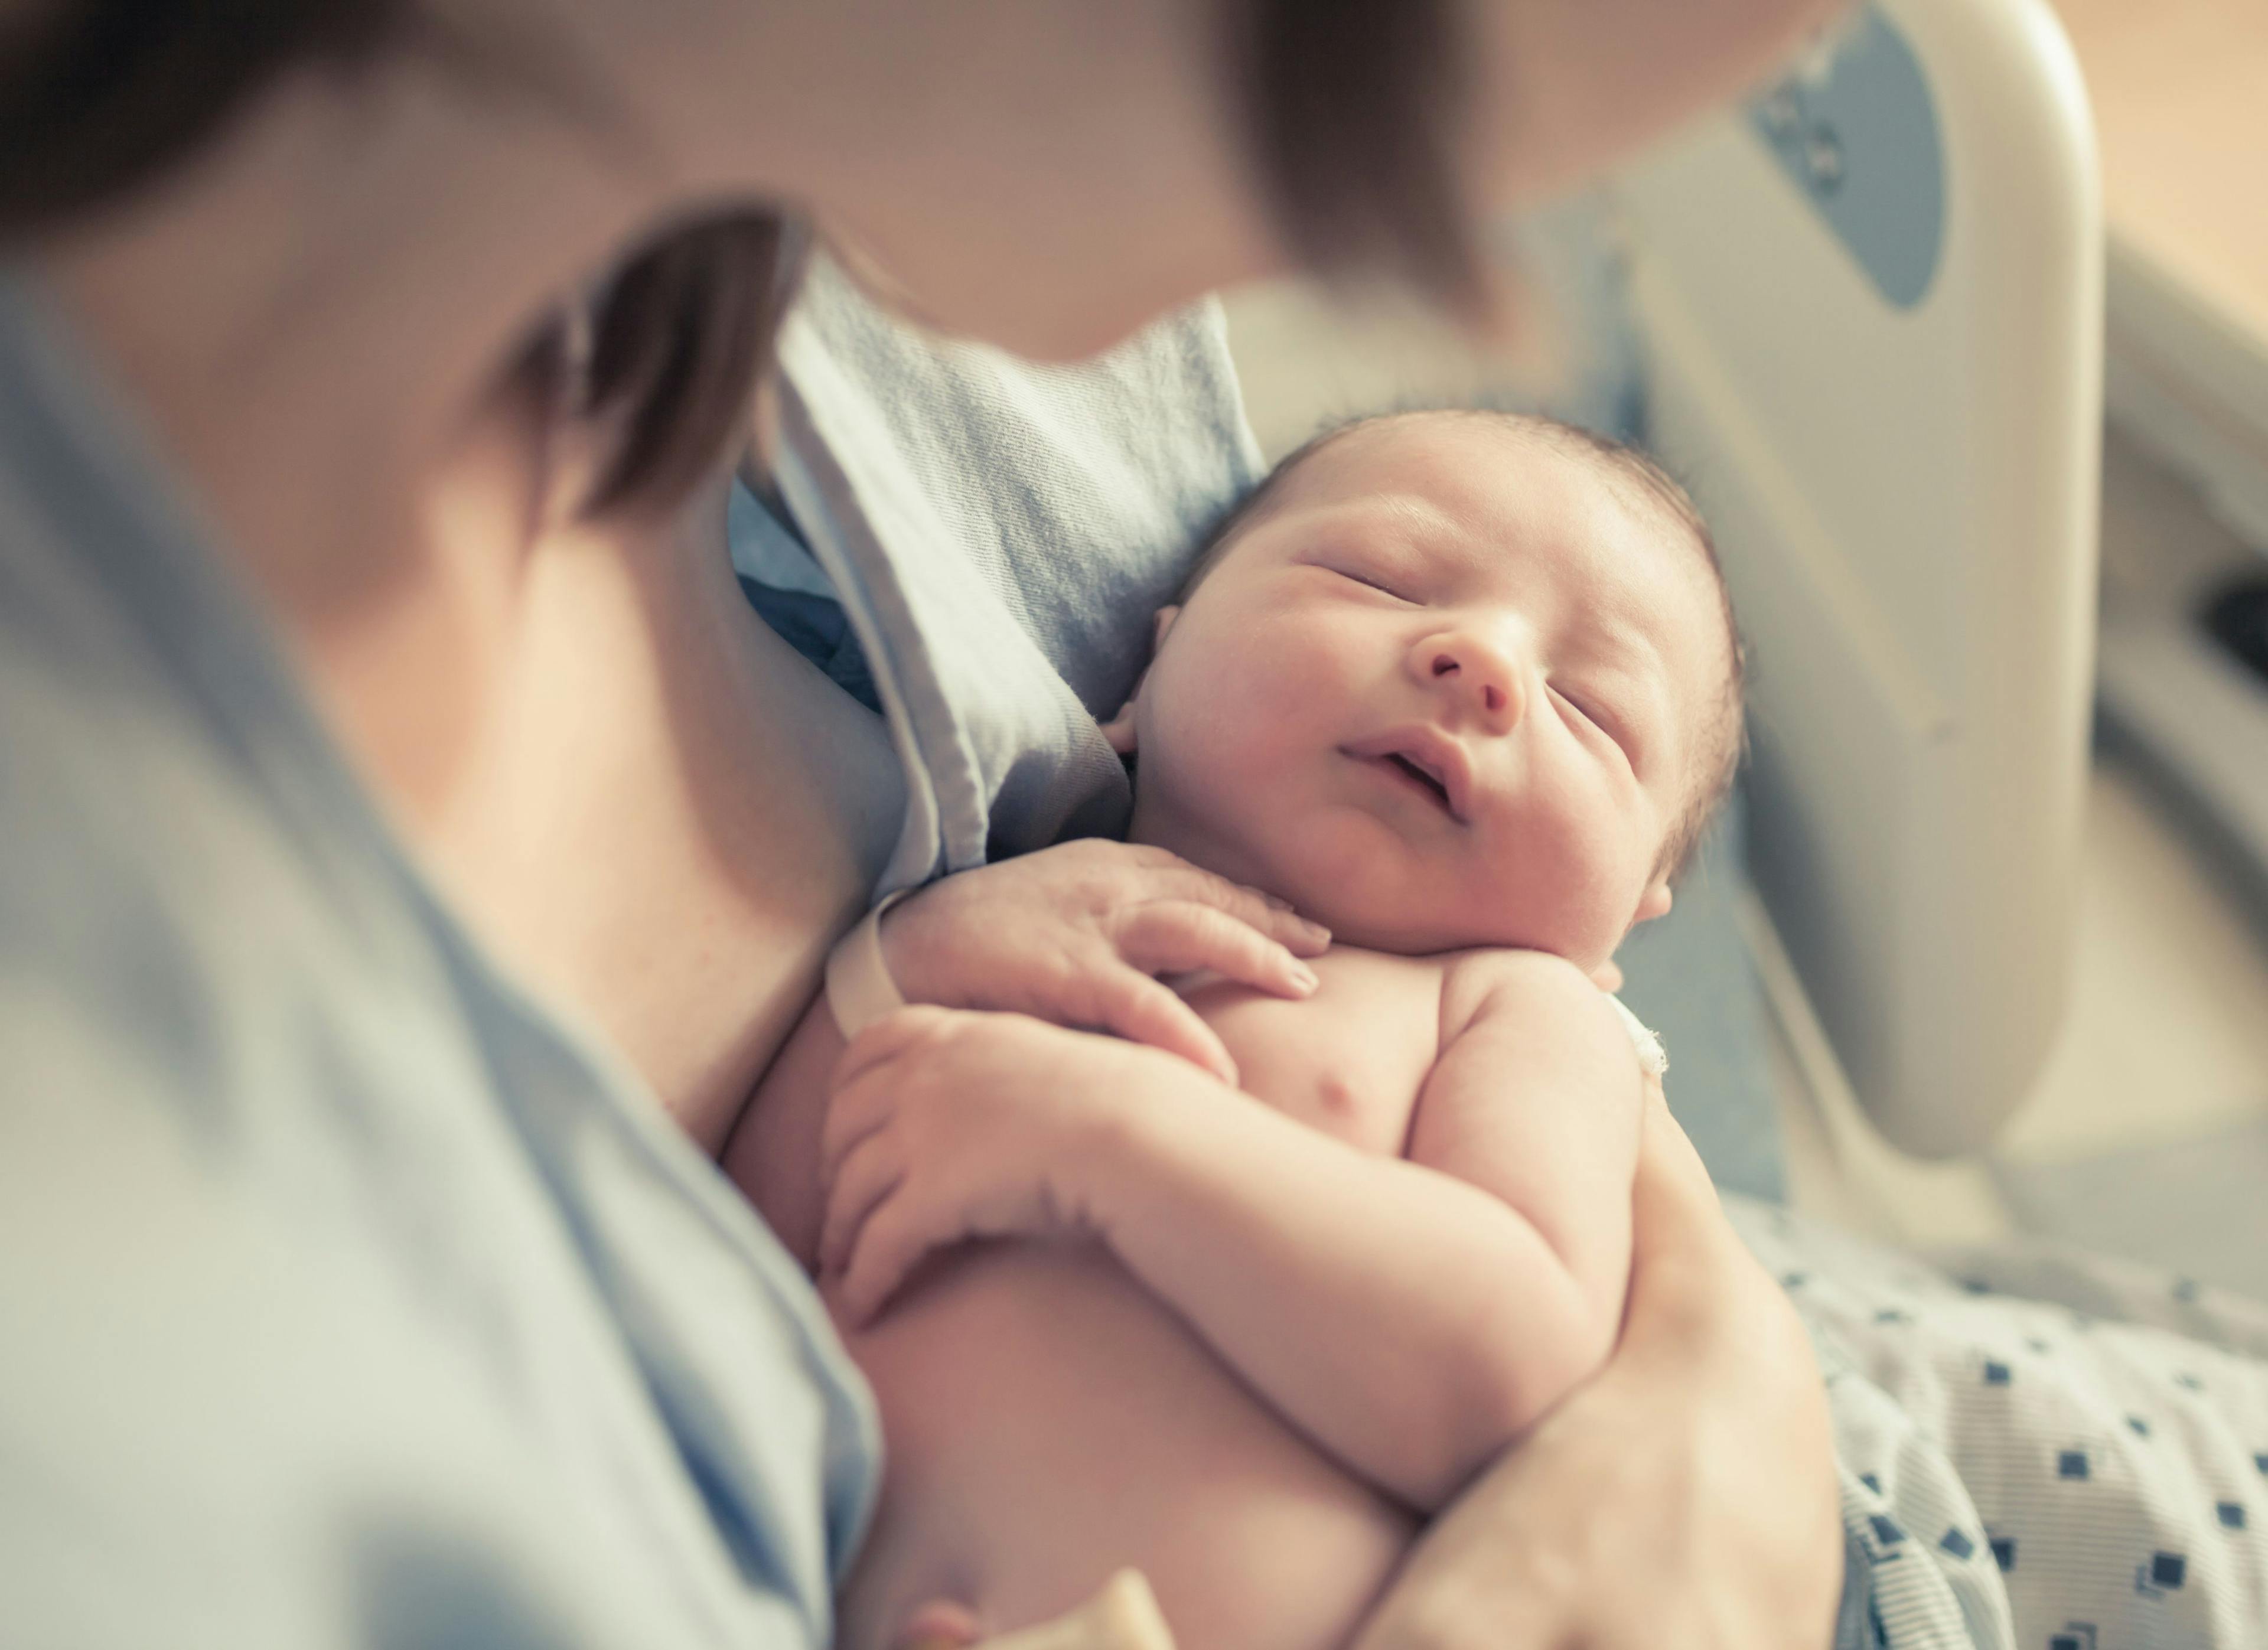 Preterm births increasing in United States